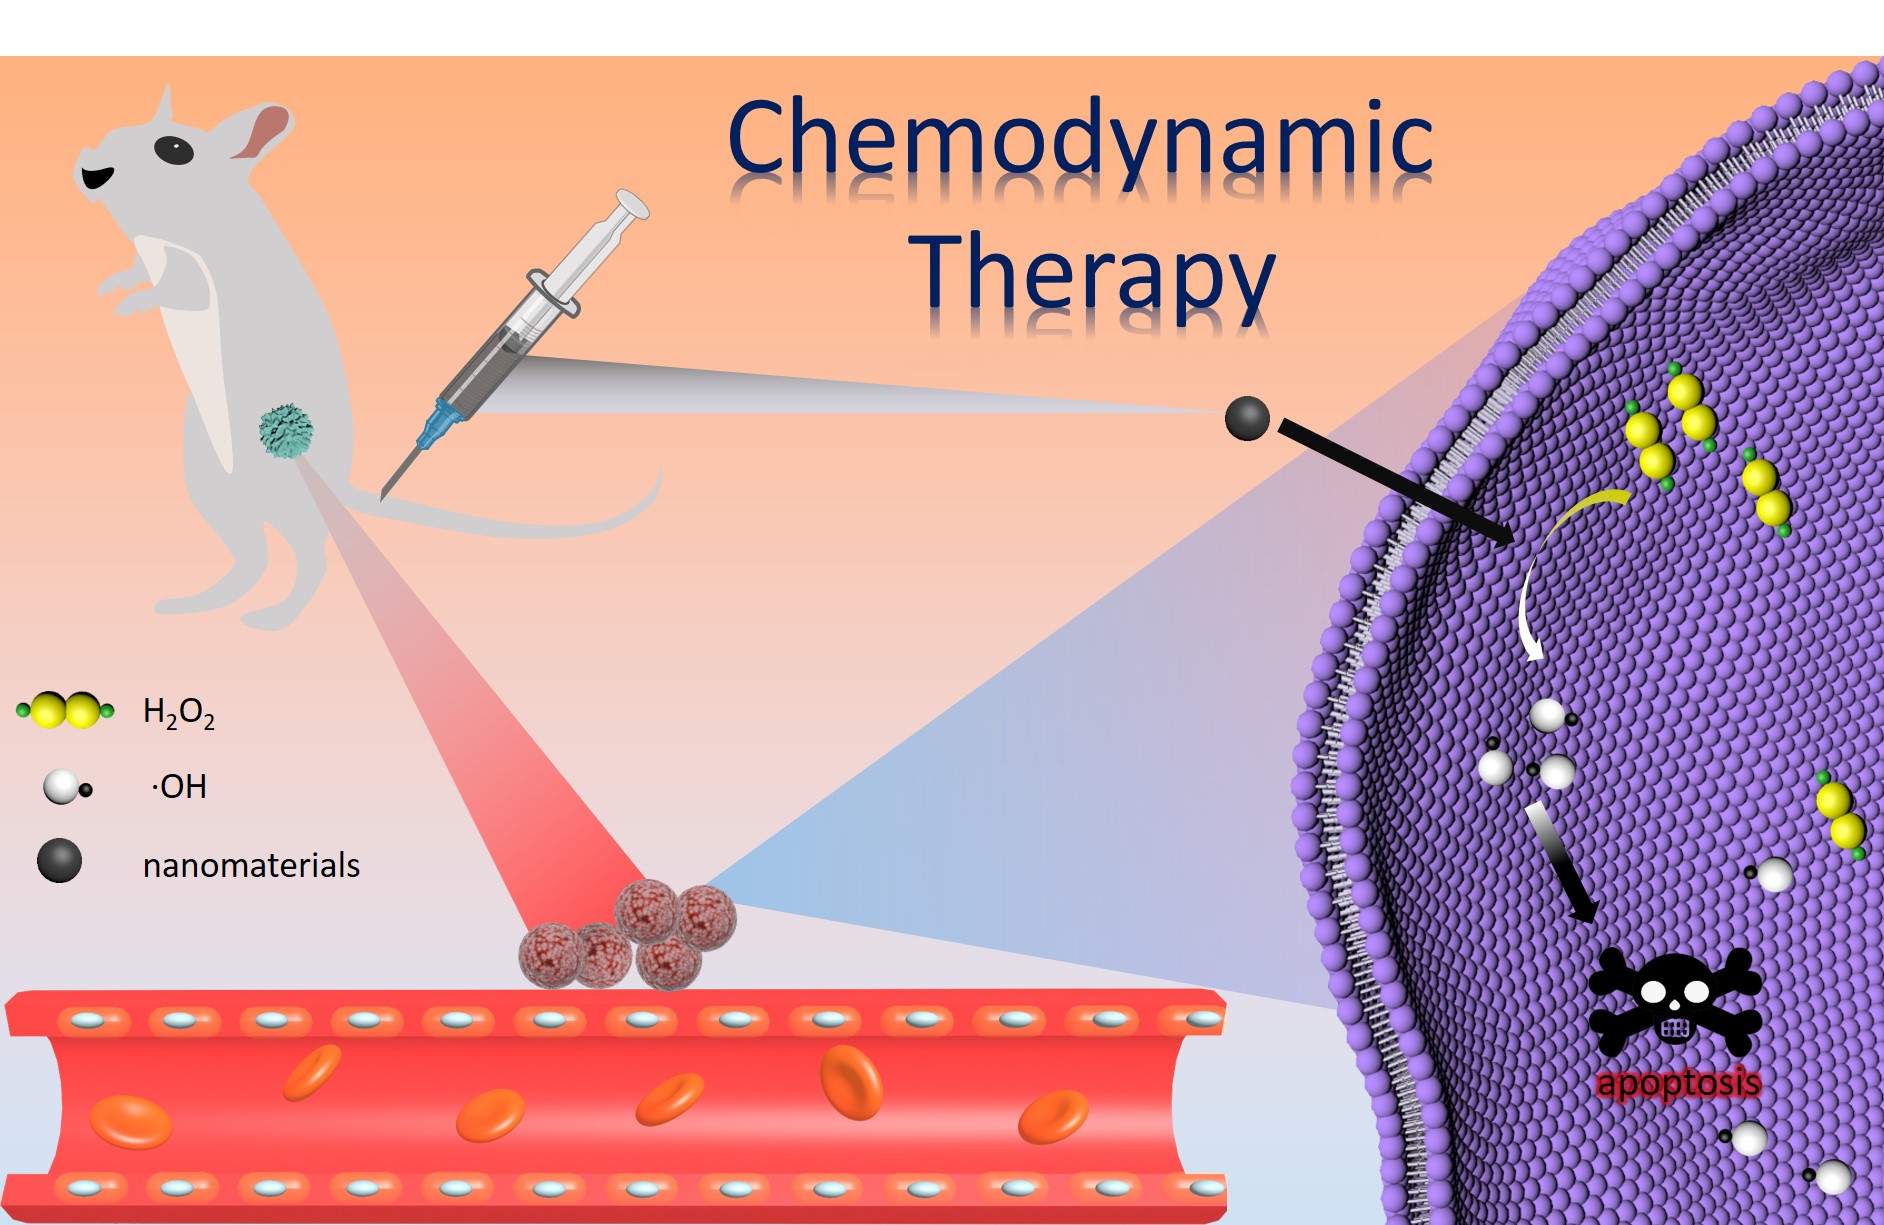 Chemodynamic therapy